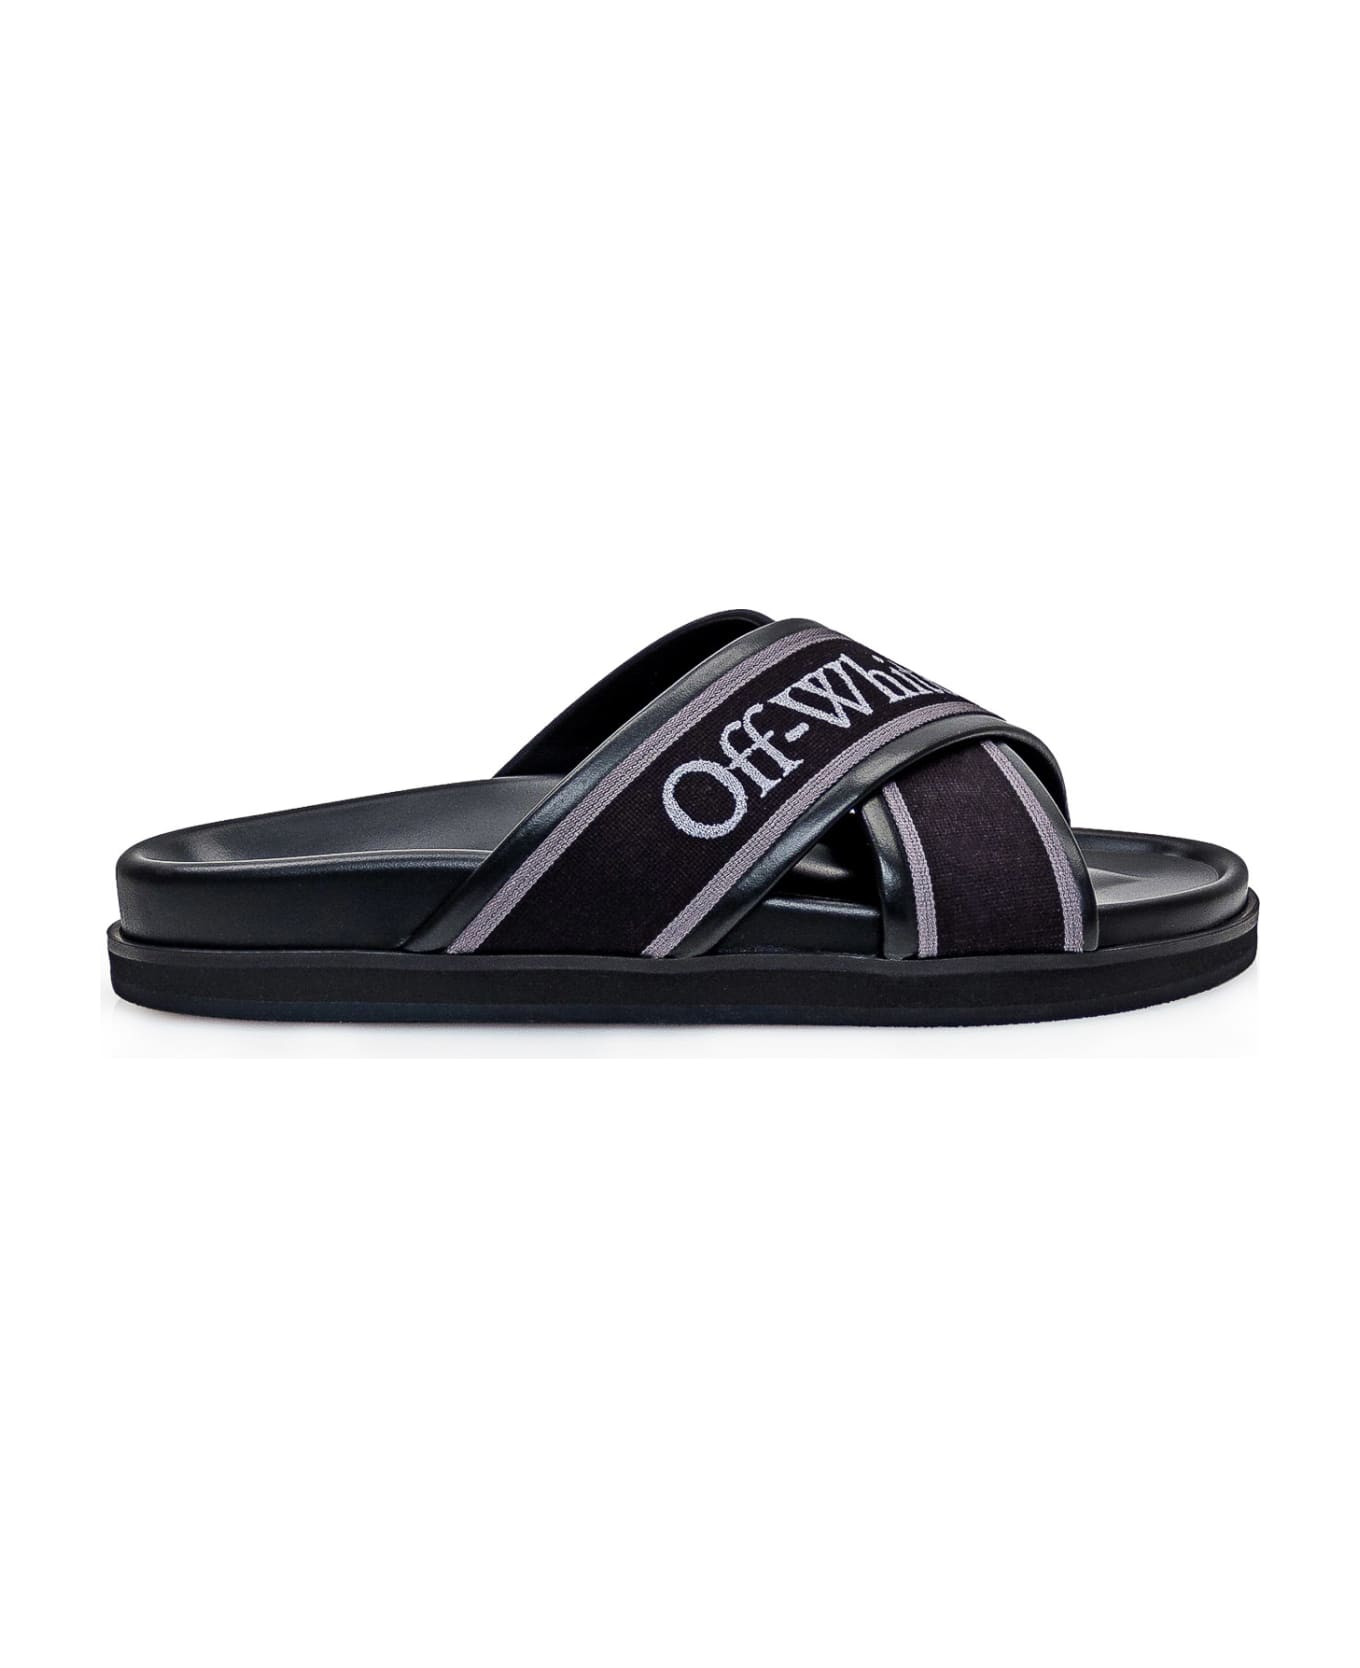 Off-White Sandals - Black Black